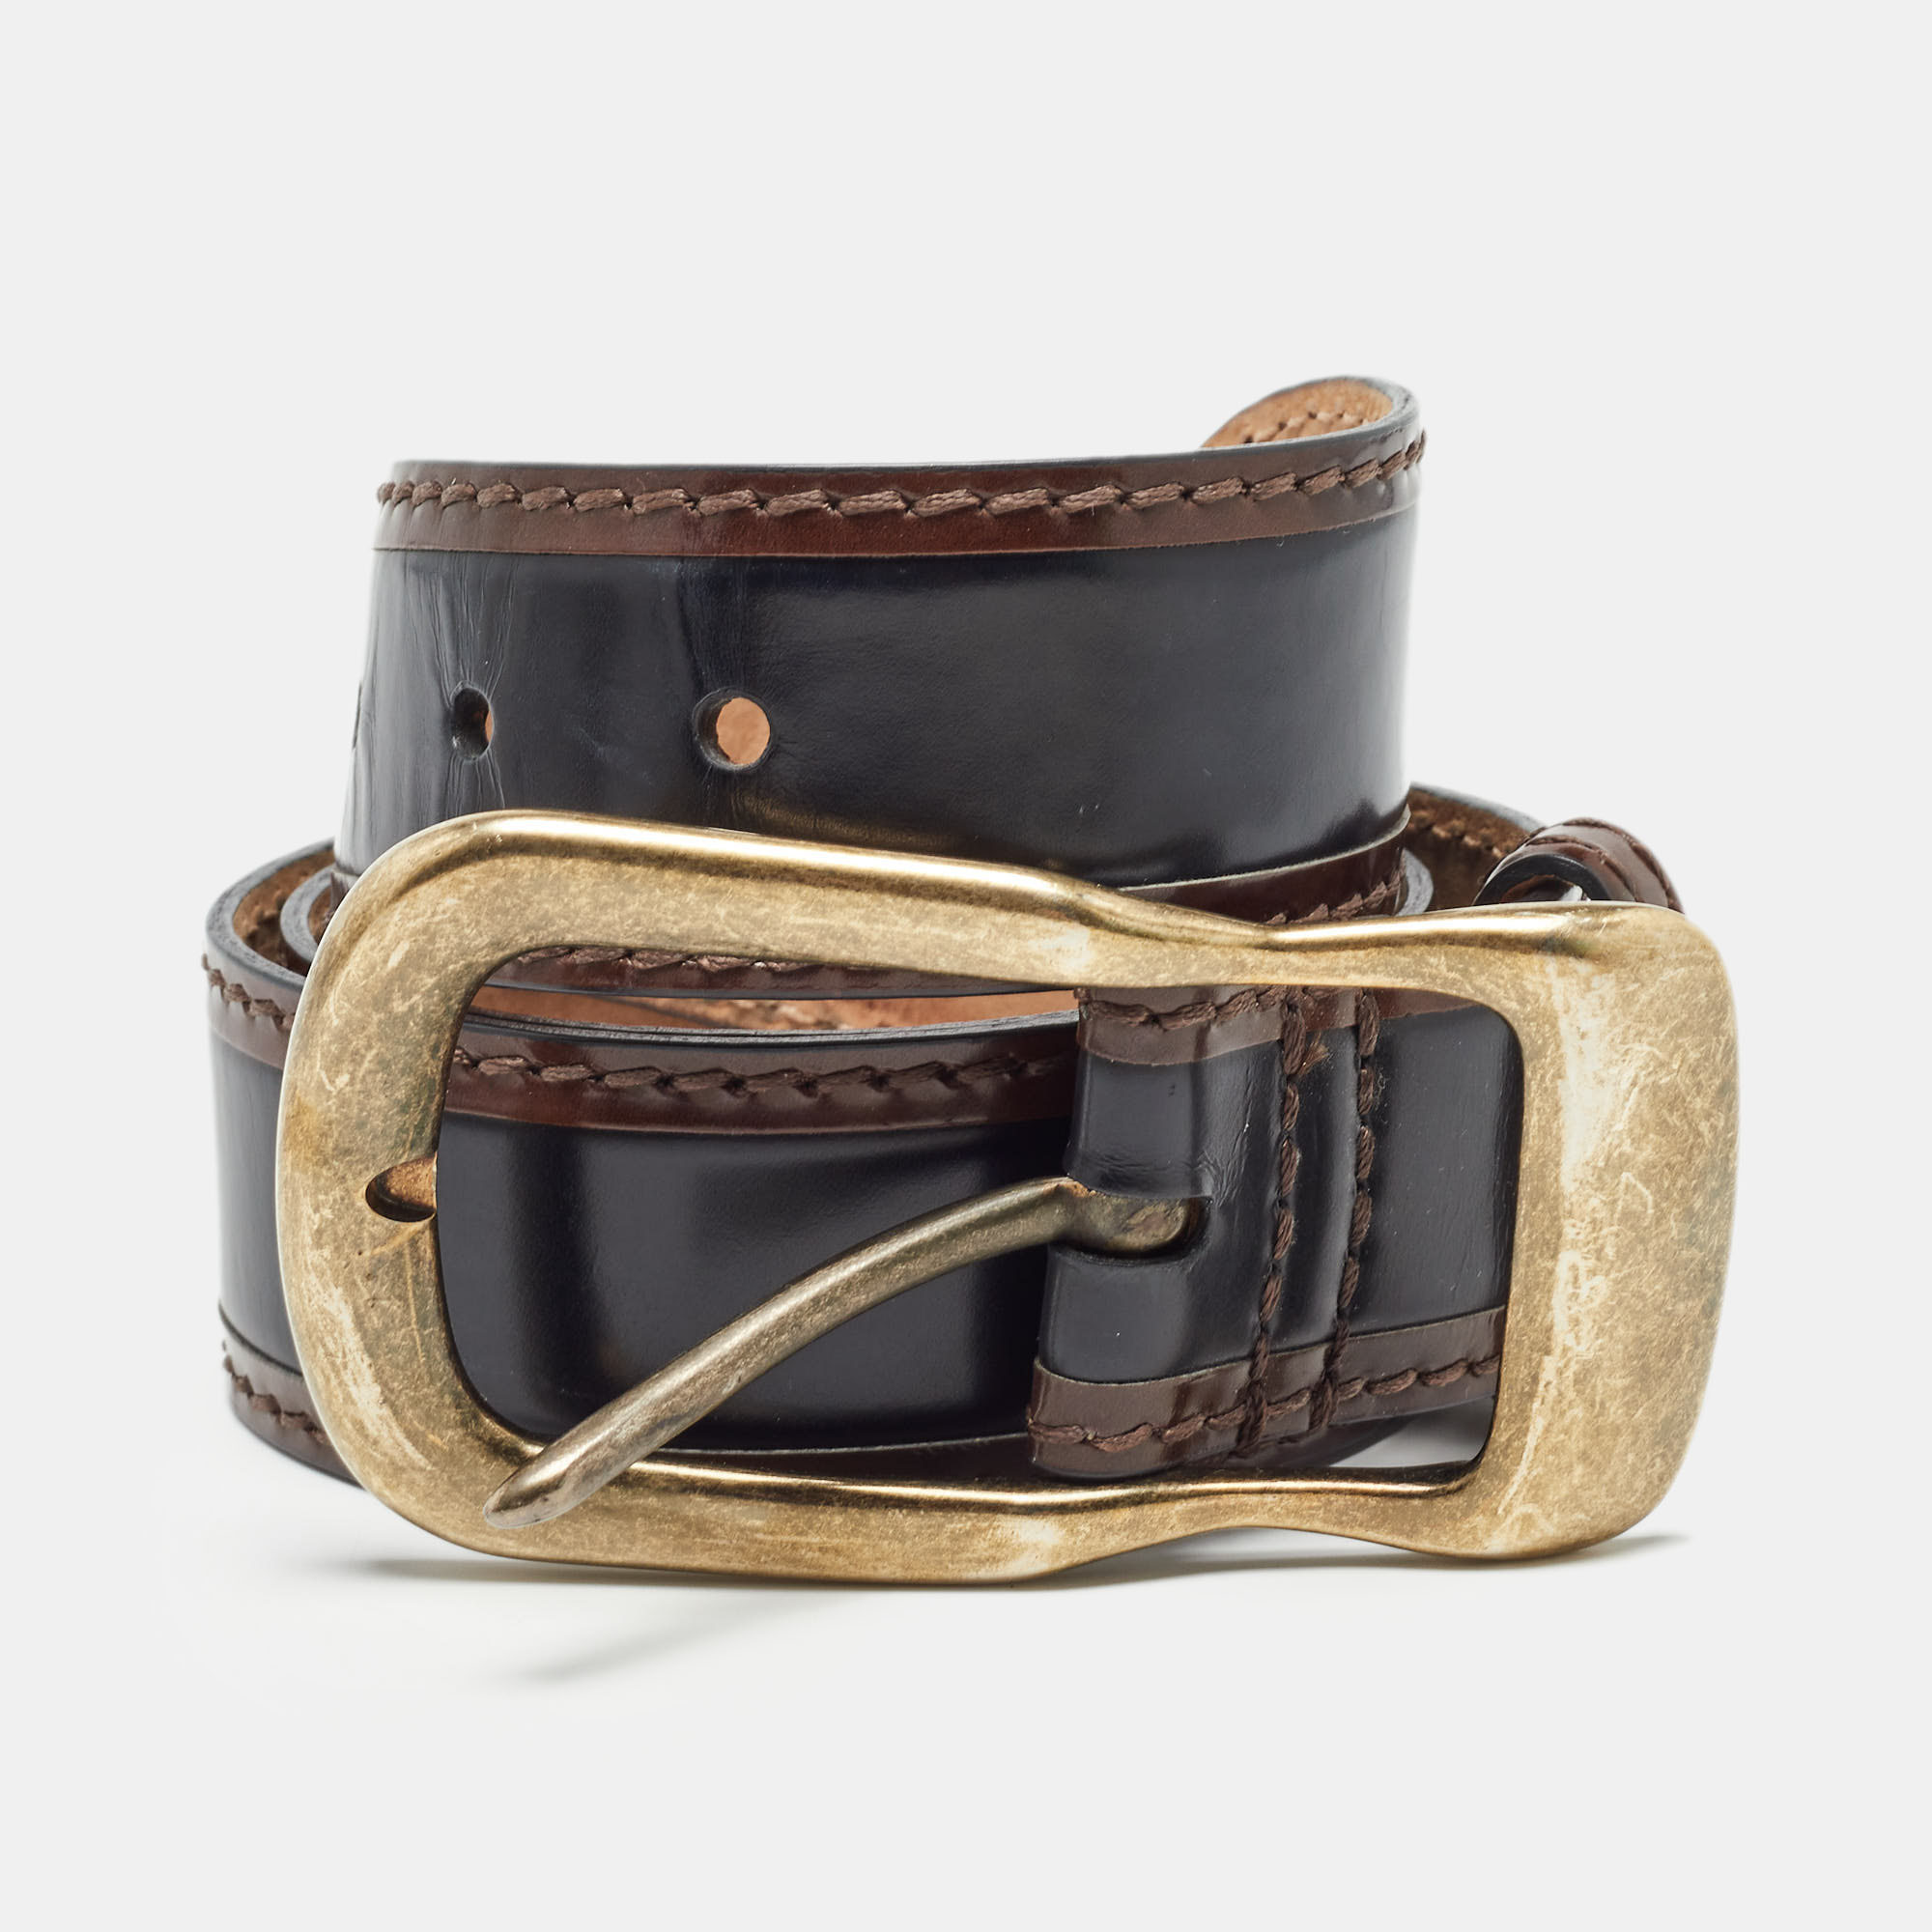 D&g black/brown glossy leather buckle belt 85cm